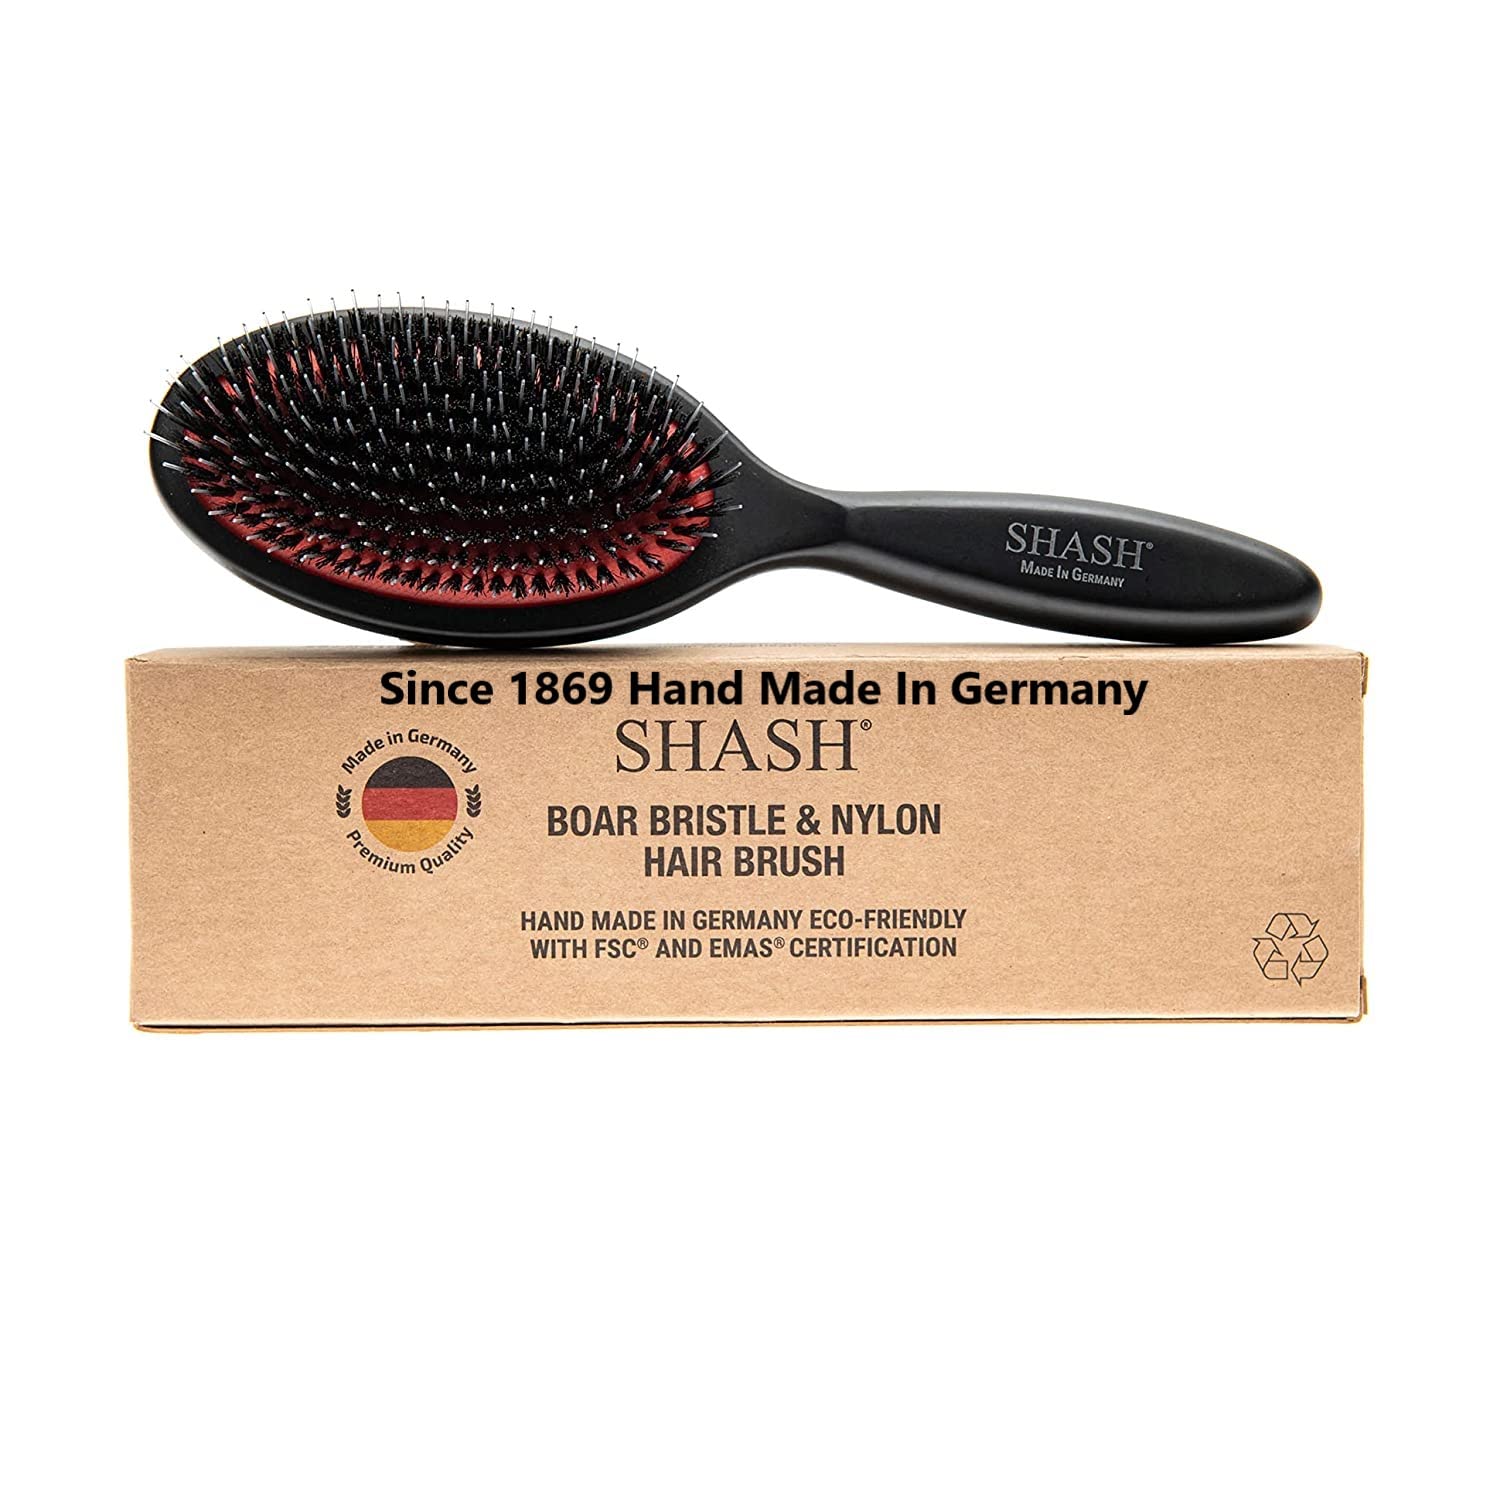 Since 1869 Hand Made In Germany - Nylon Boar Bristle [...]